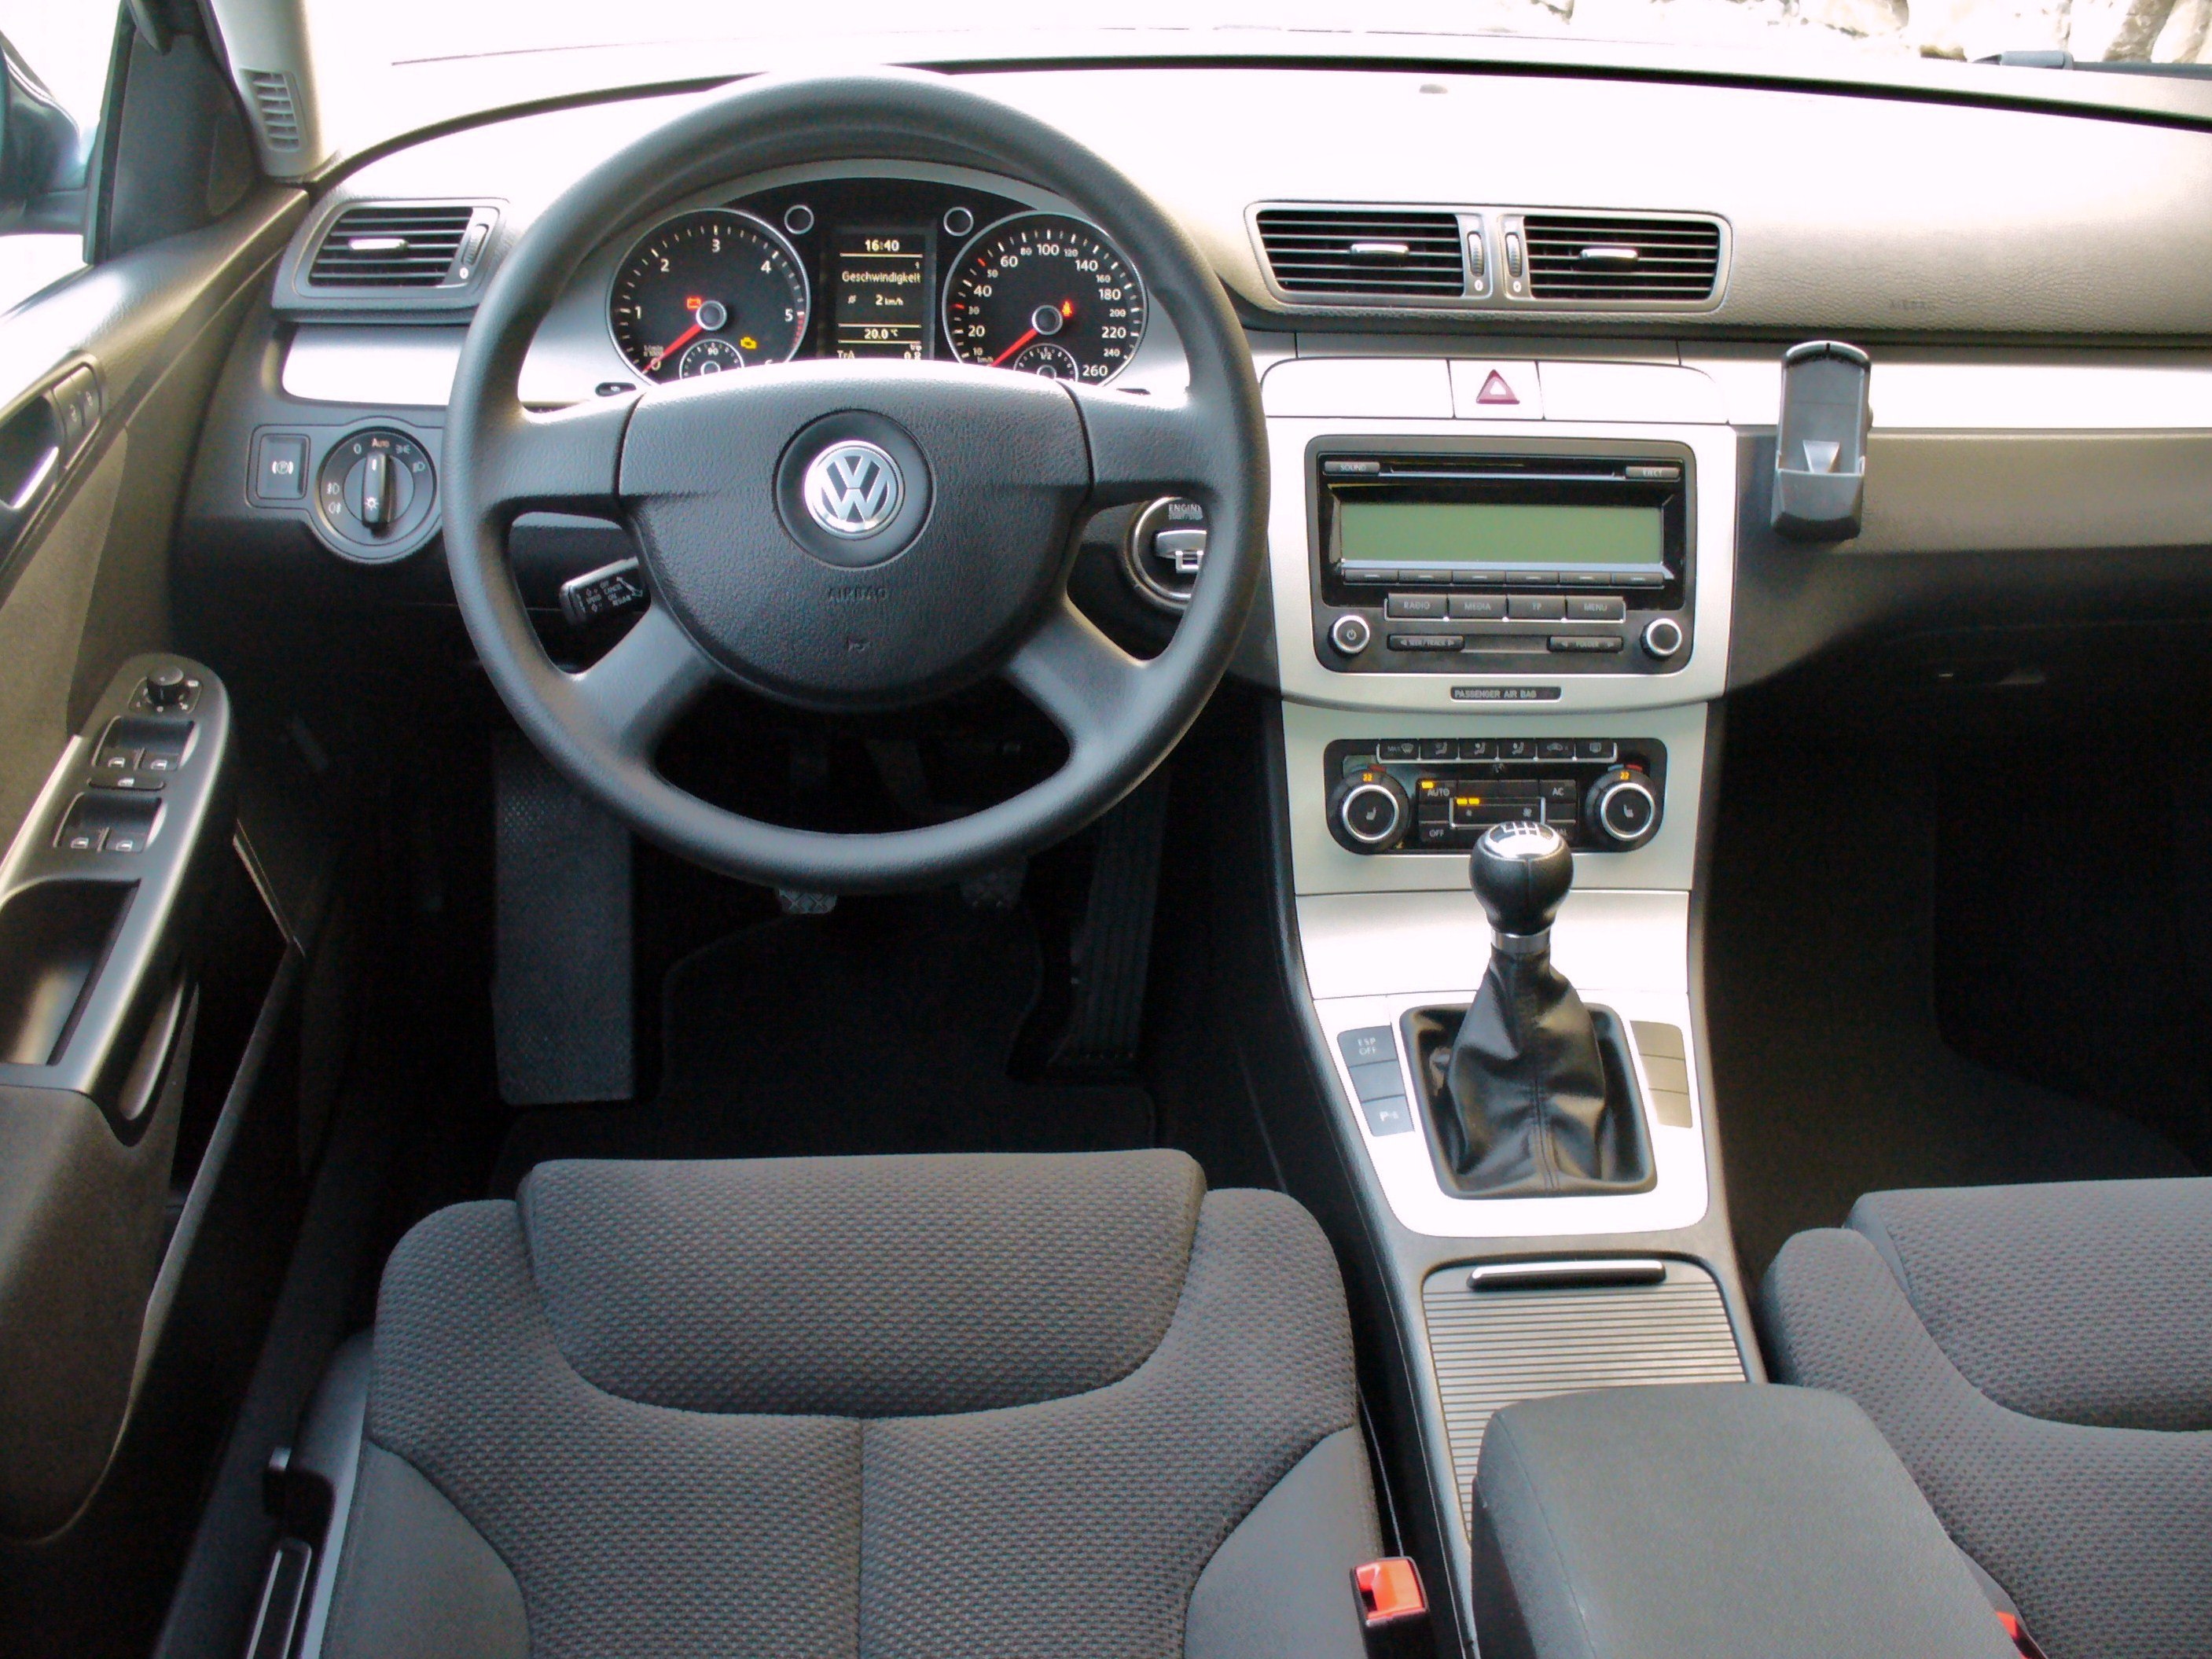 Открыть пассат б6. Фольксваген Пассат б6 салон. VW Passat b6 Interior. VW Passat b6 салон. Фольксваген Пассат б6 2008.